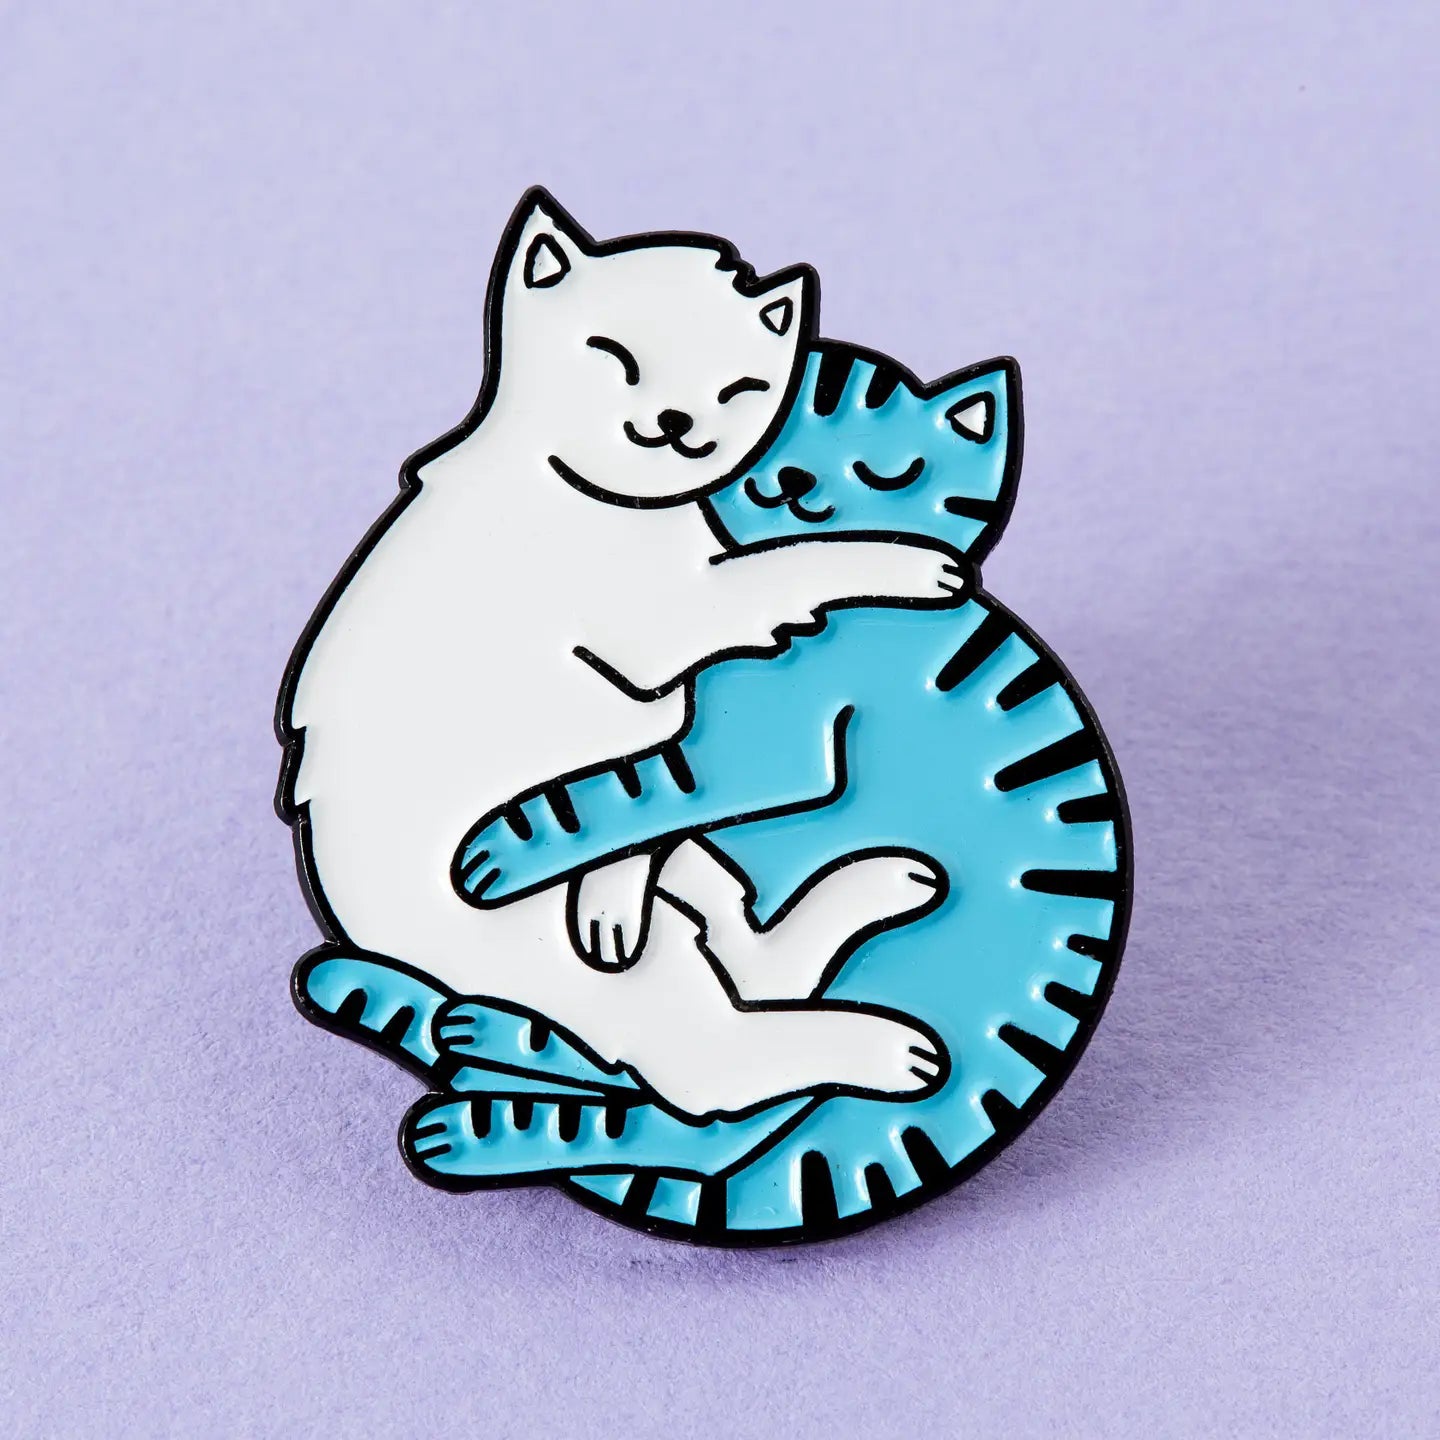 Cuddling Cats pin